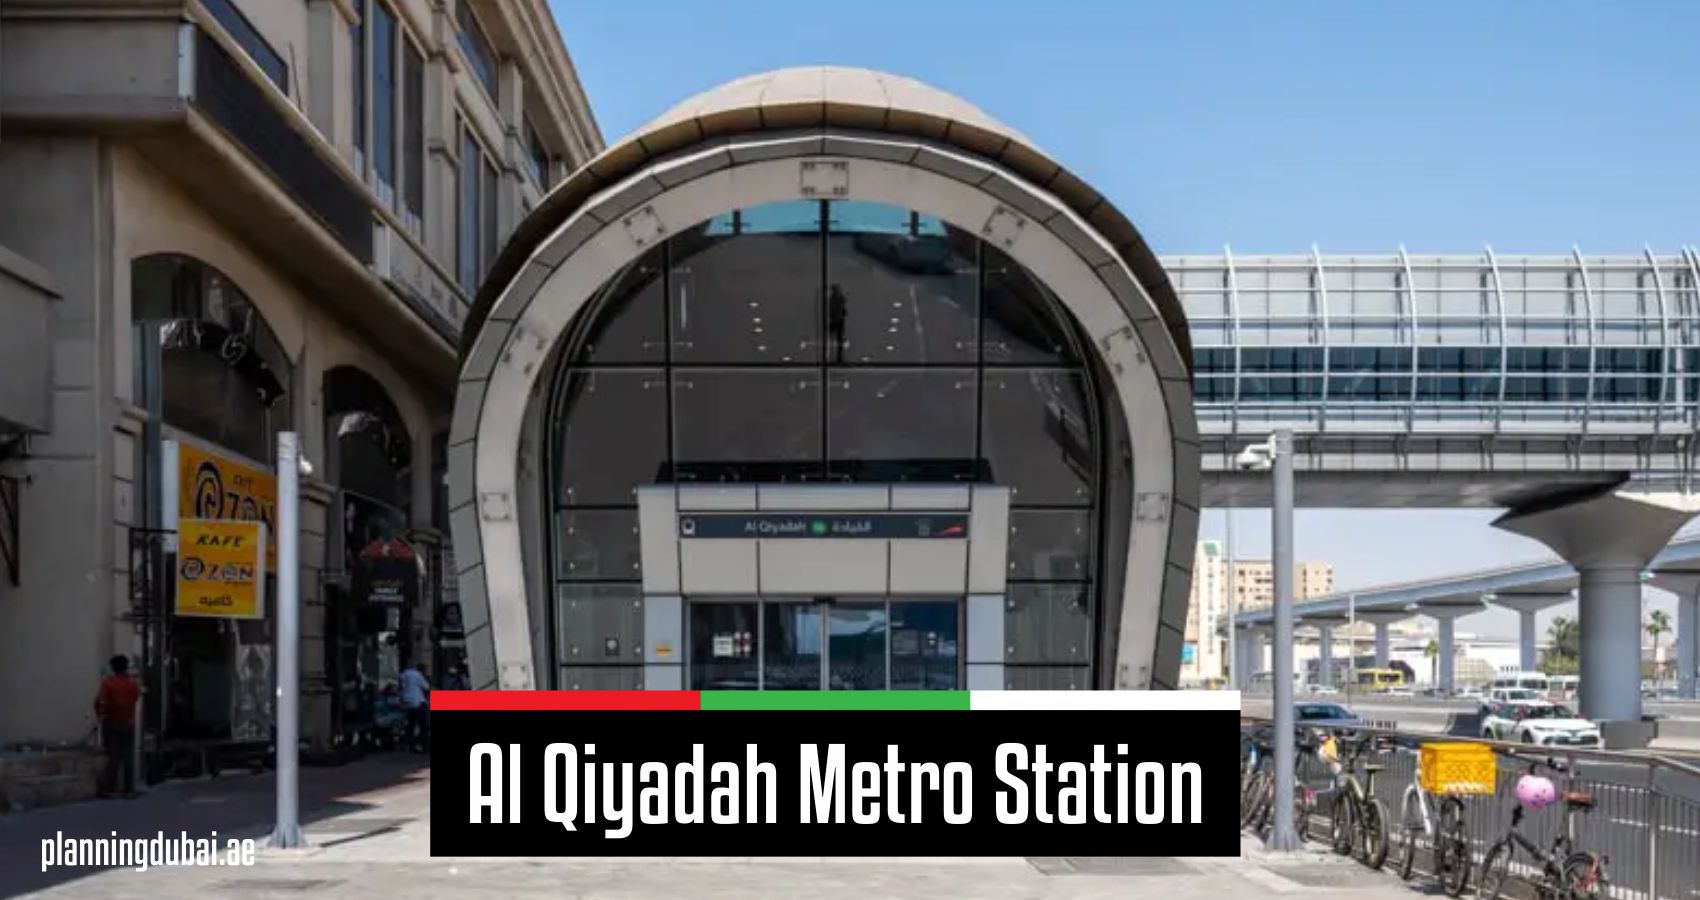 Al Qiyadah Metro Station